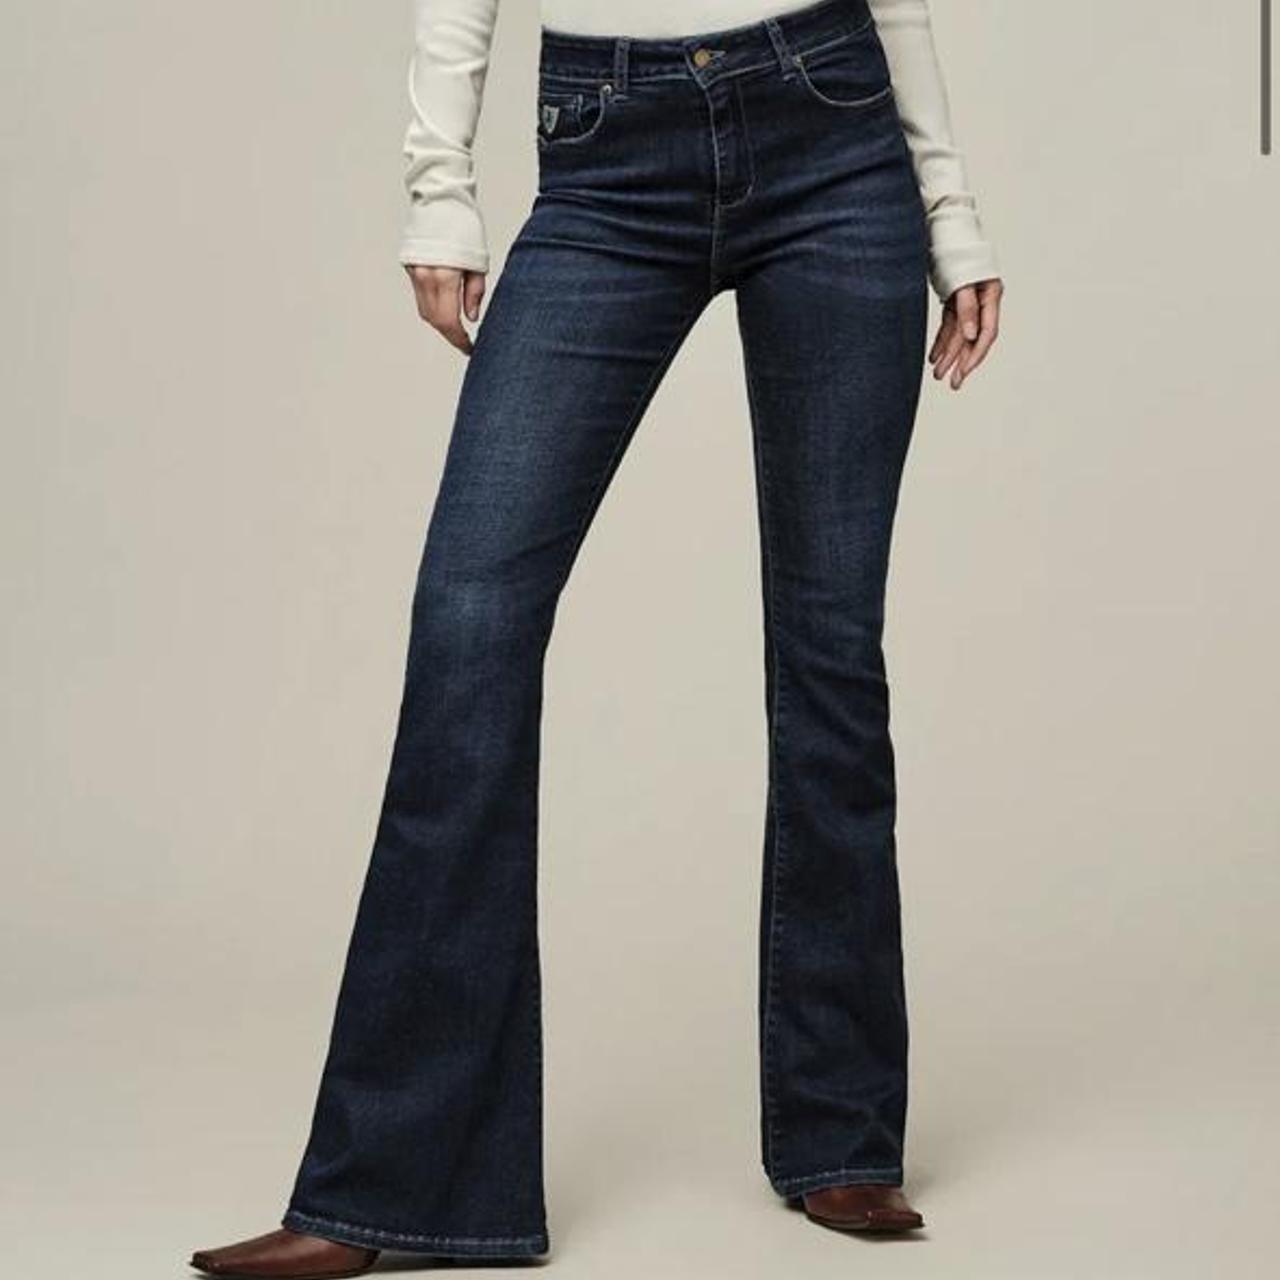 Lois jeans dark wash bootcut brand new never worn... - Depop